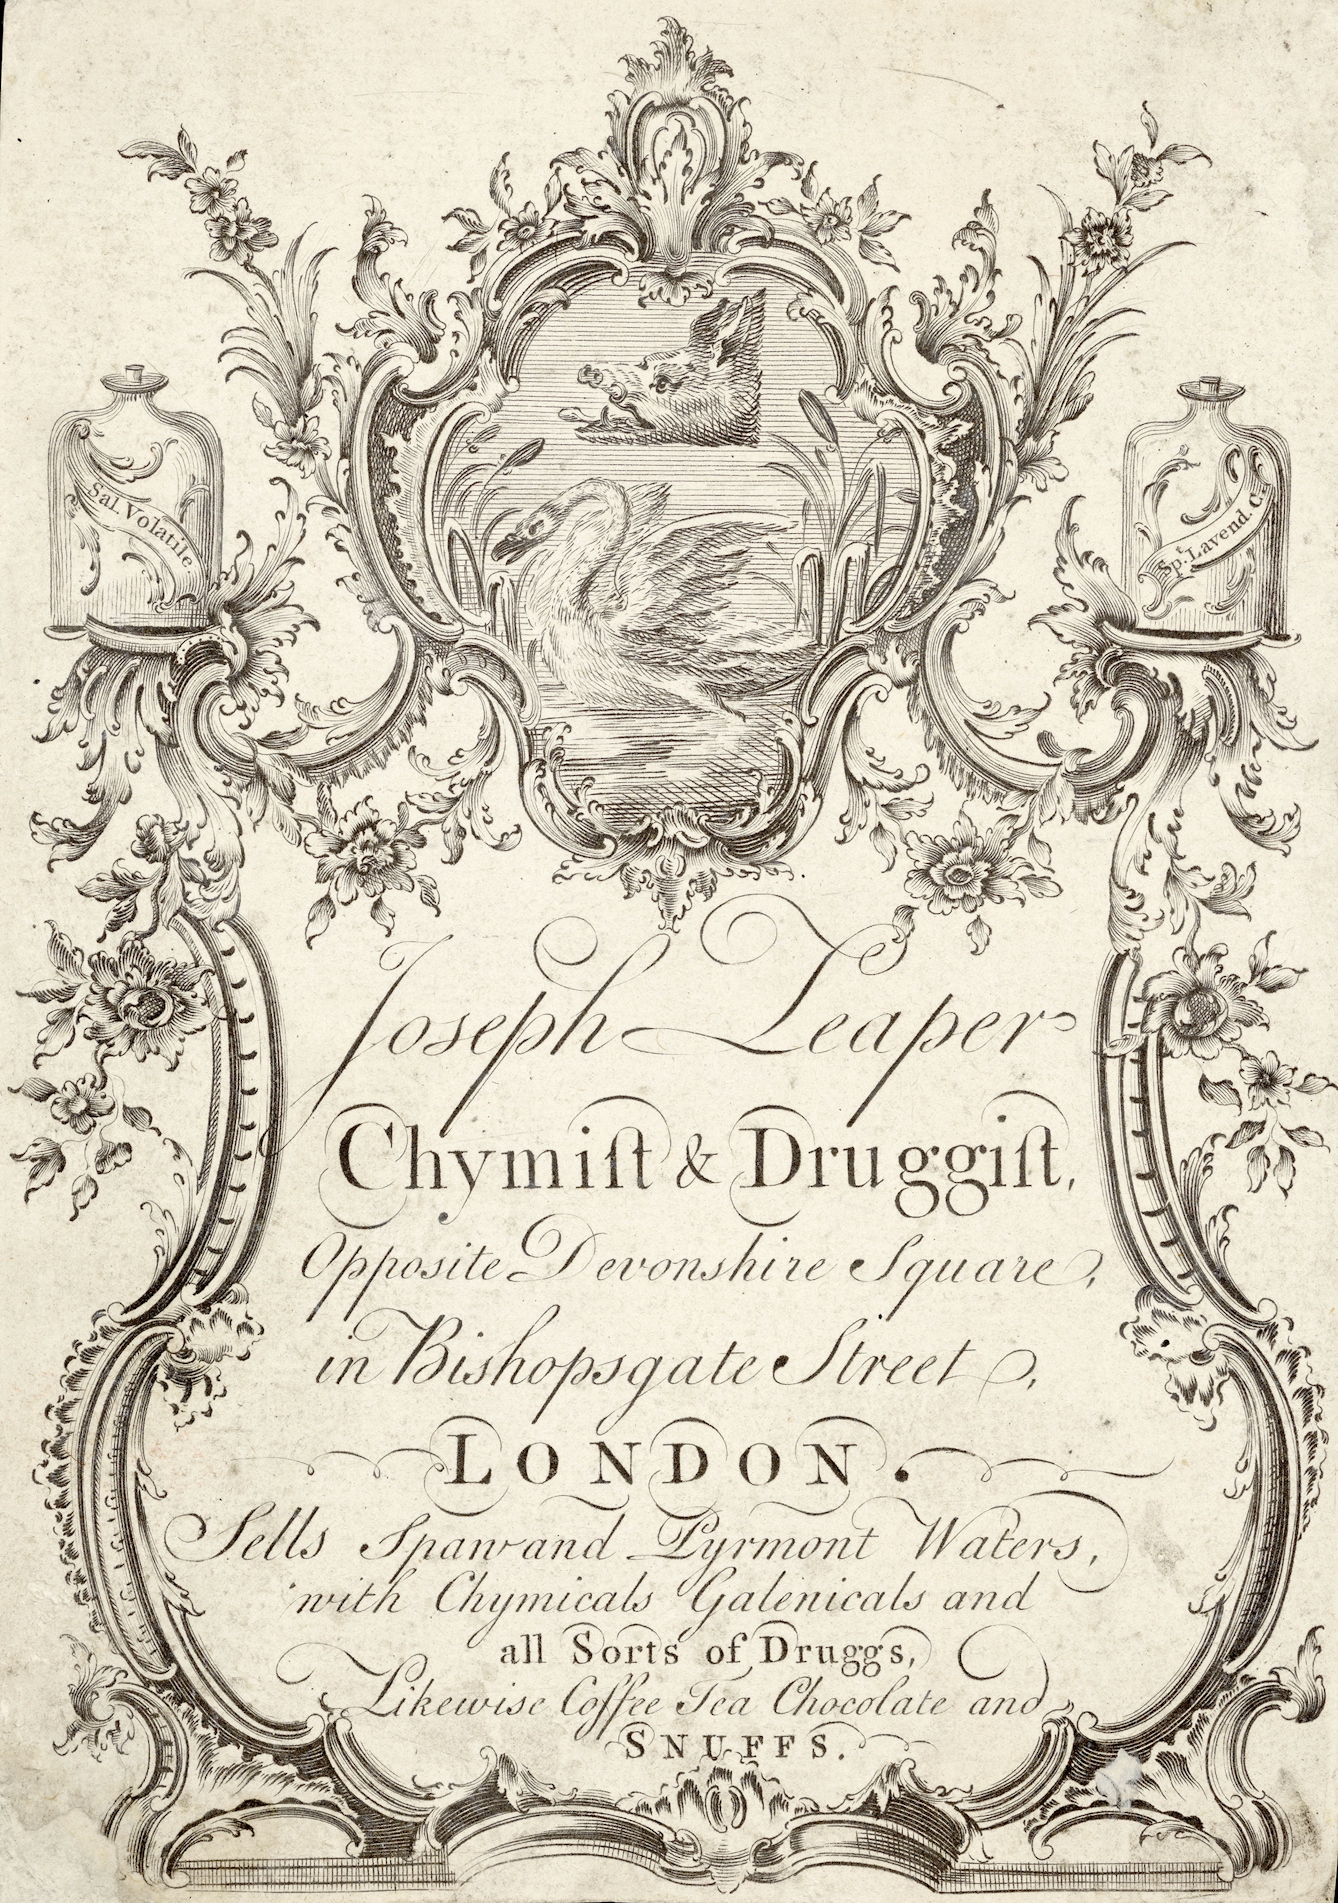 18th century trade card of Joseph Leaper, chymist and druggist